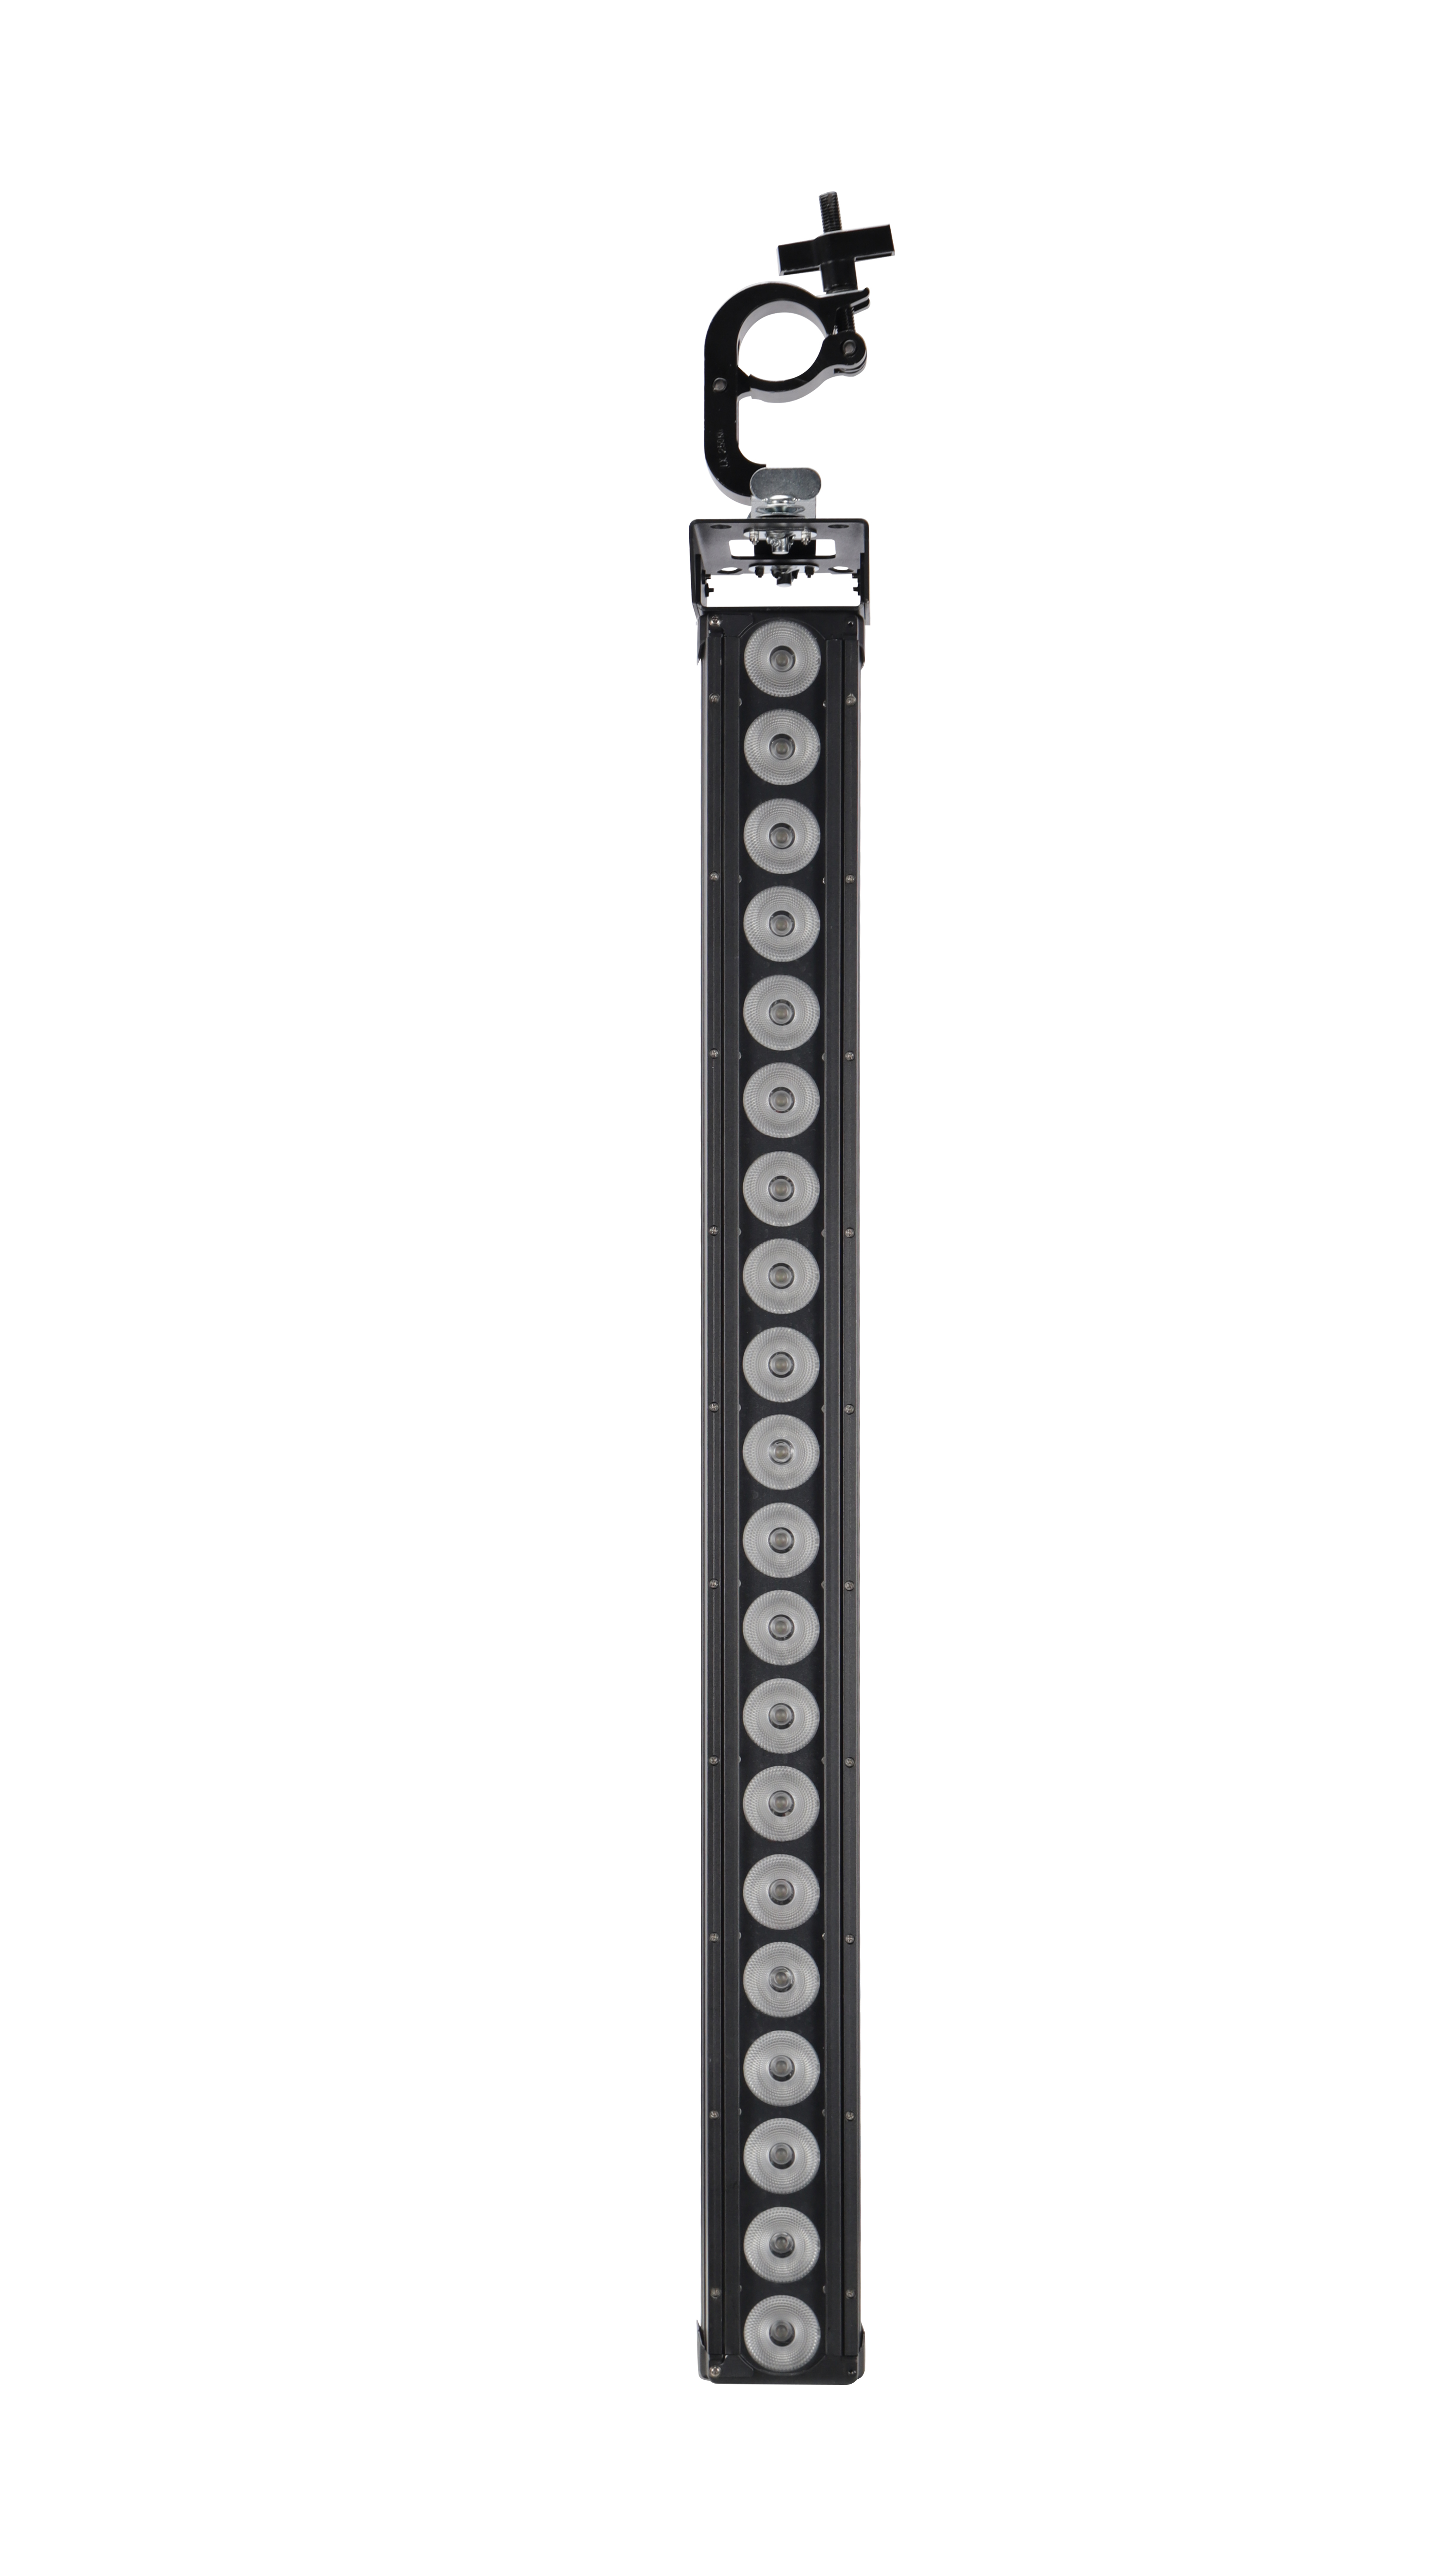 20x15W LED Pixel Bar Light